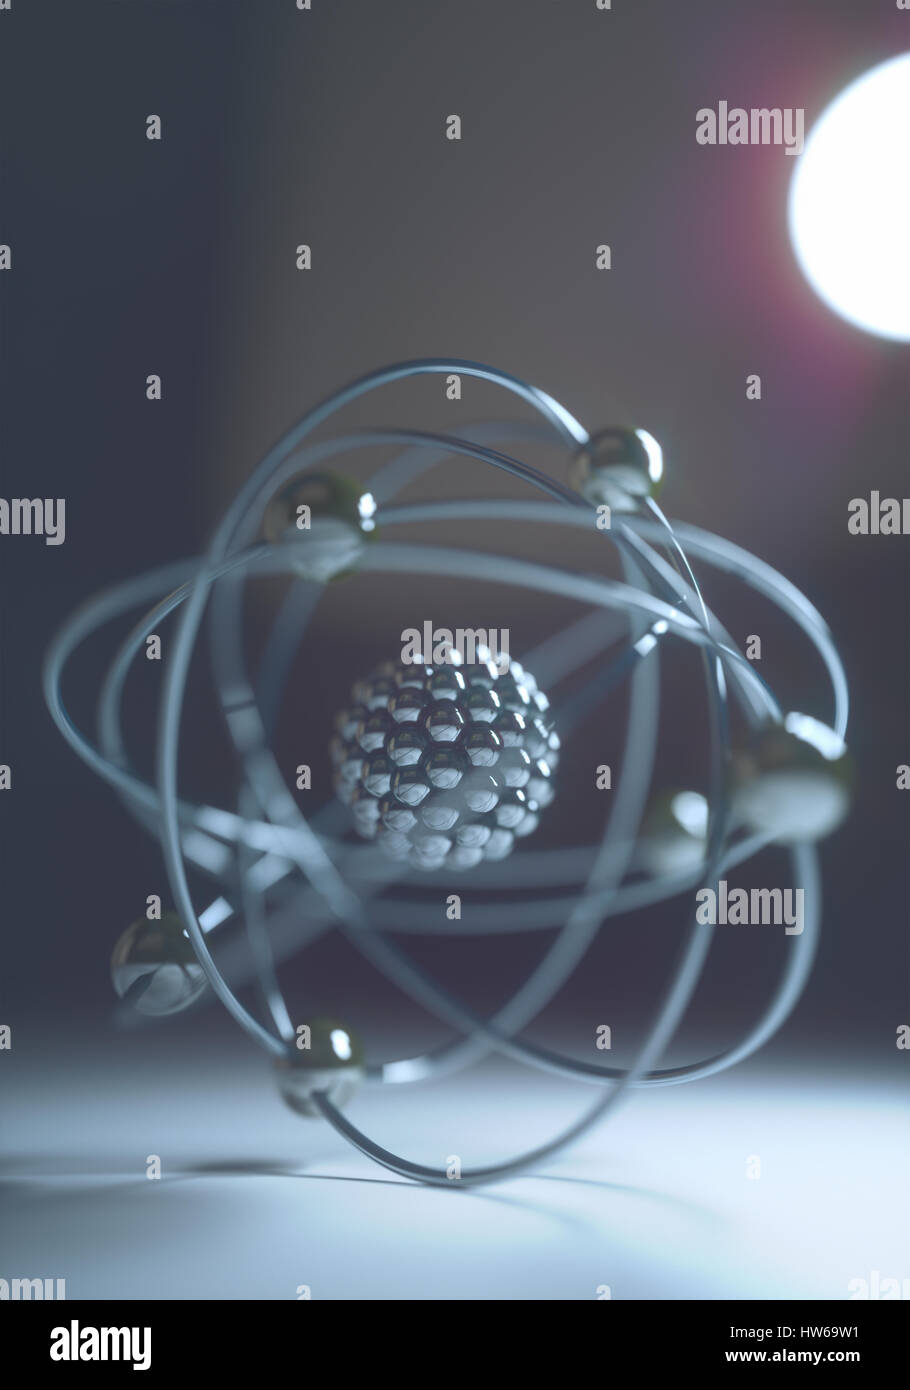 Atom, illustration. Stock Photo